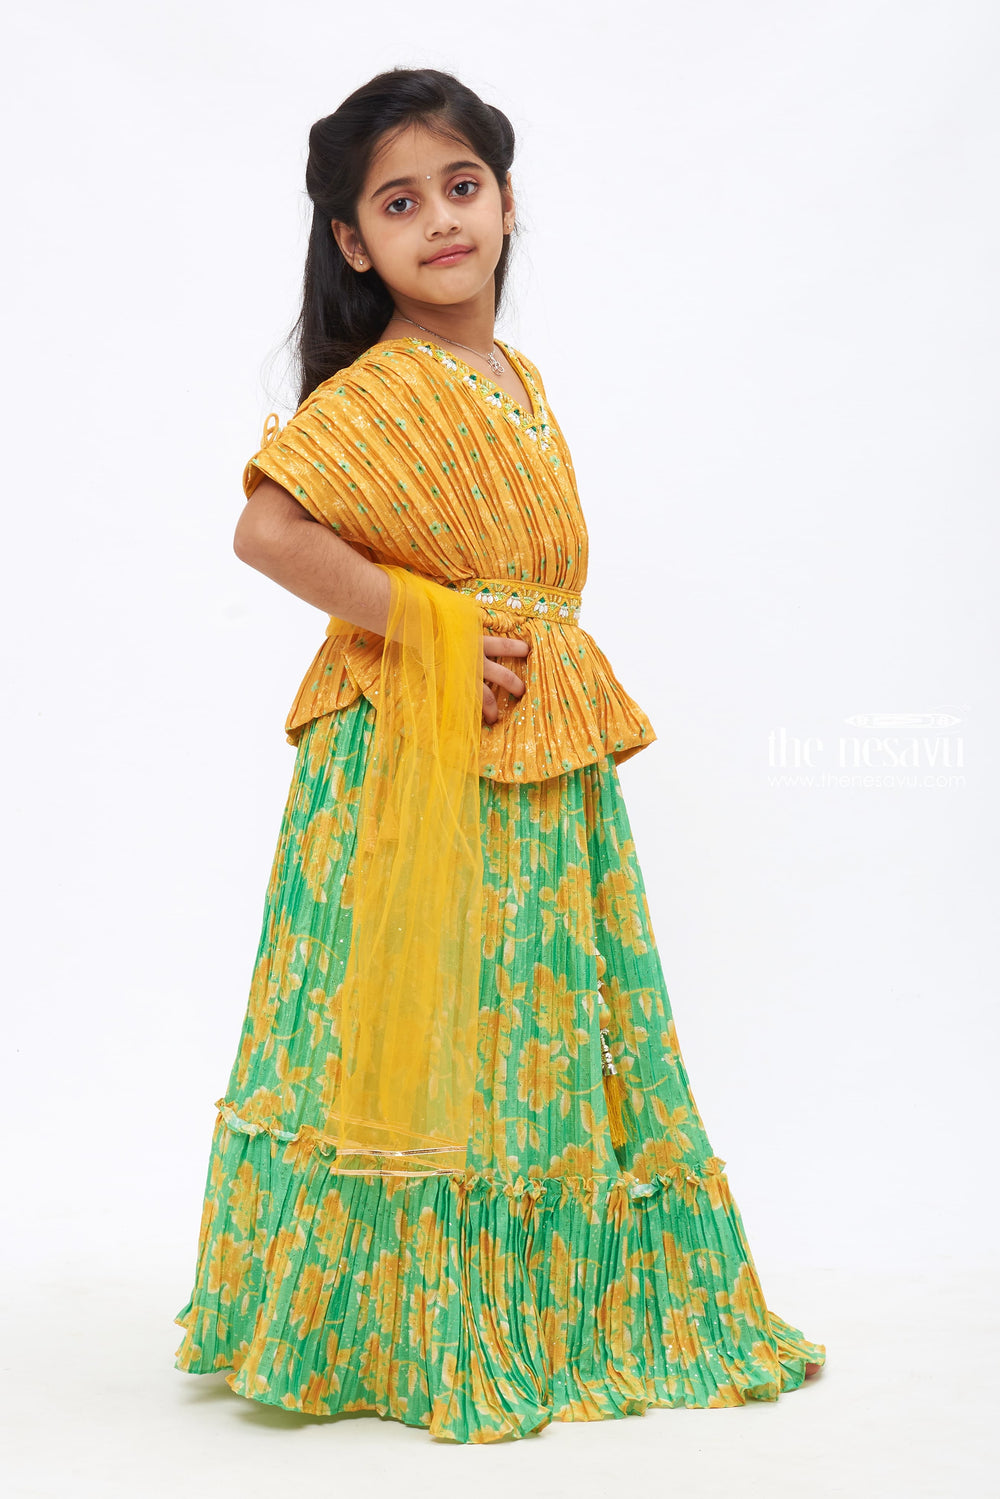 The Nesavu Girls Lehenga Choli Meadow Radiance: Yellow Poncho Blouse with Green Floral Printed Lehenga for Girls Nesavu Festive Elegance for Little Ones | Girls Lehenga Choli Sets for Diwali | The Nesavu